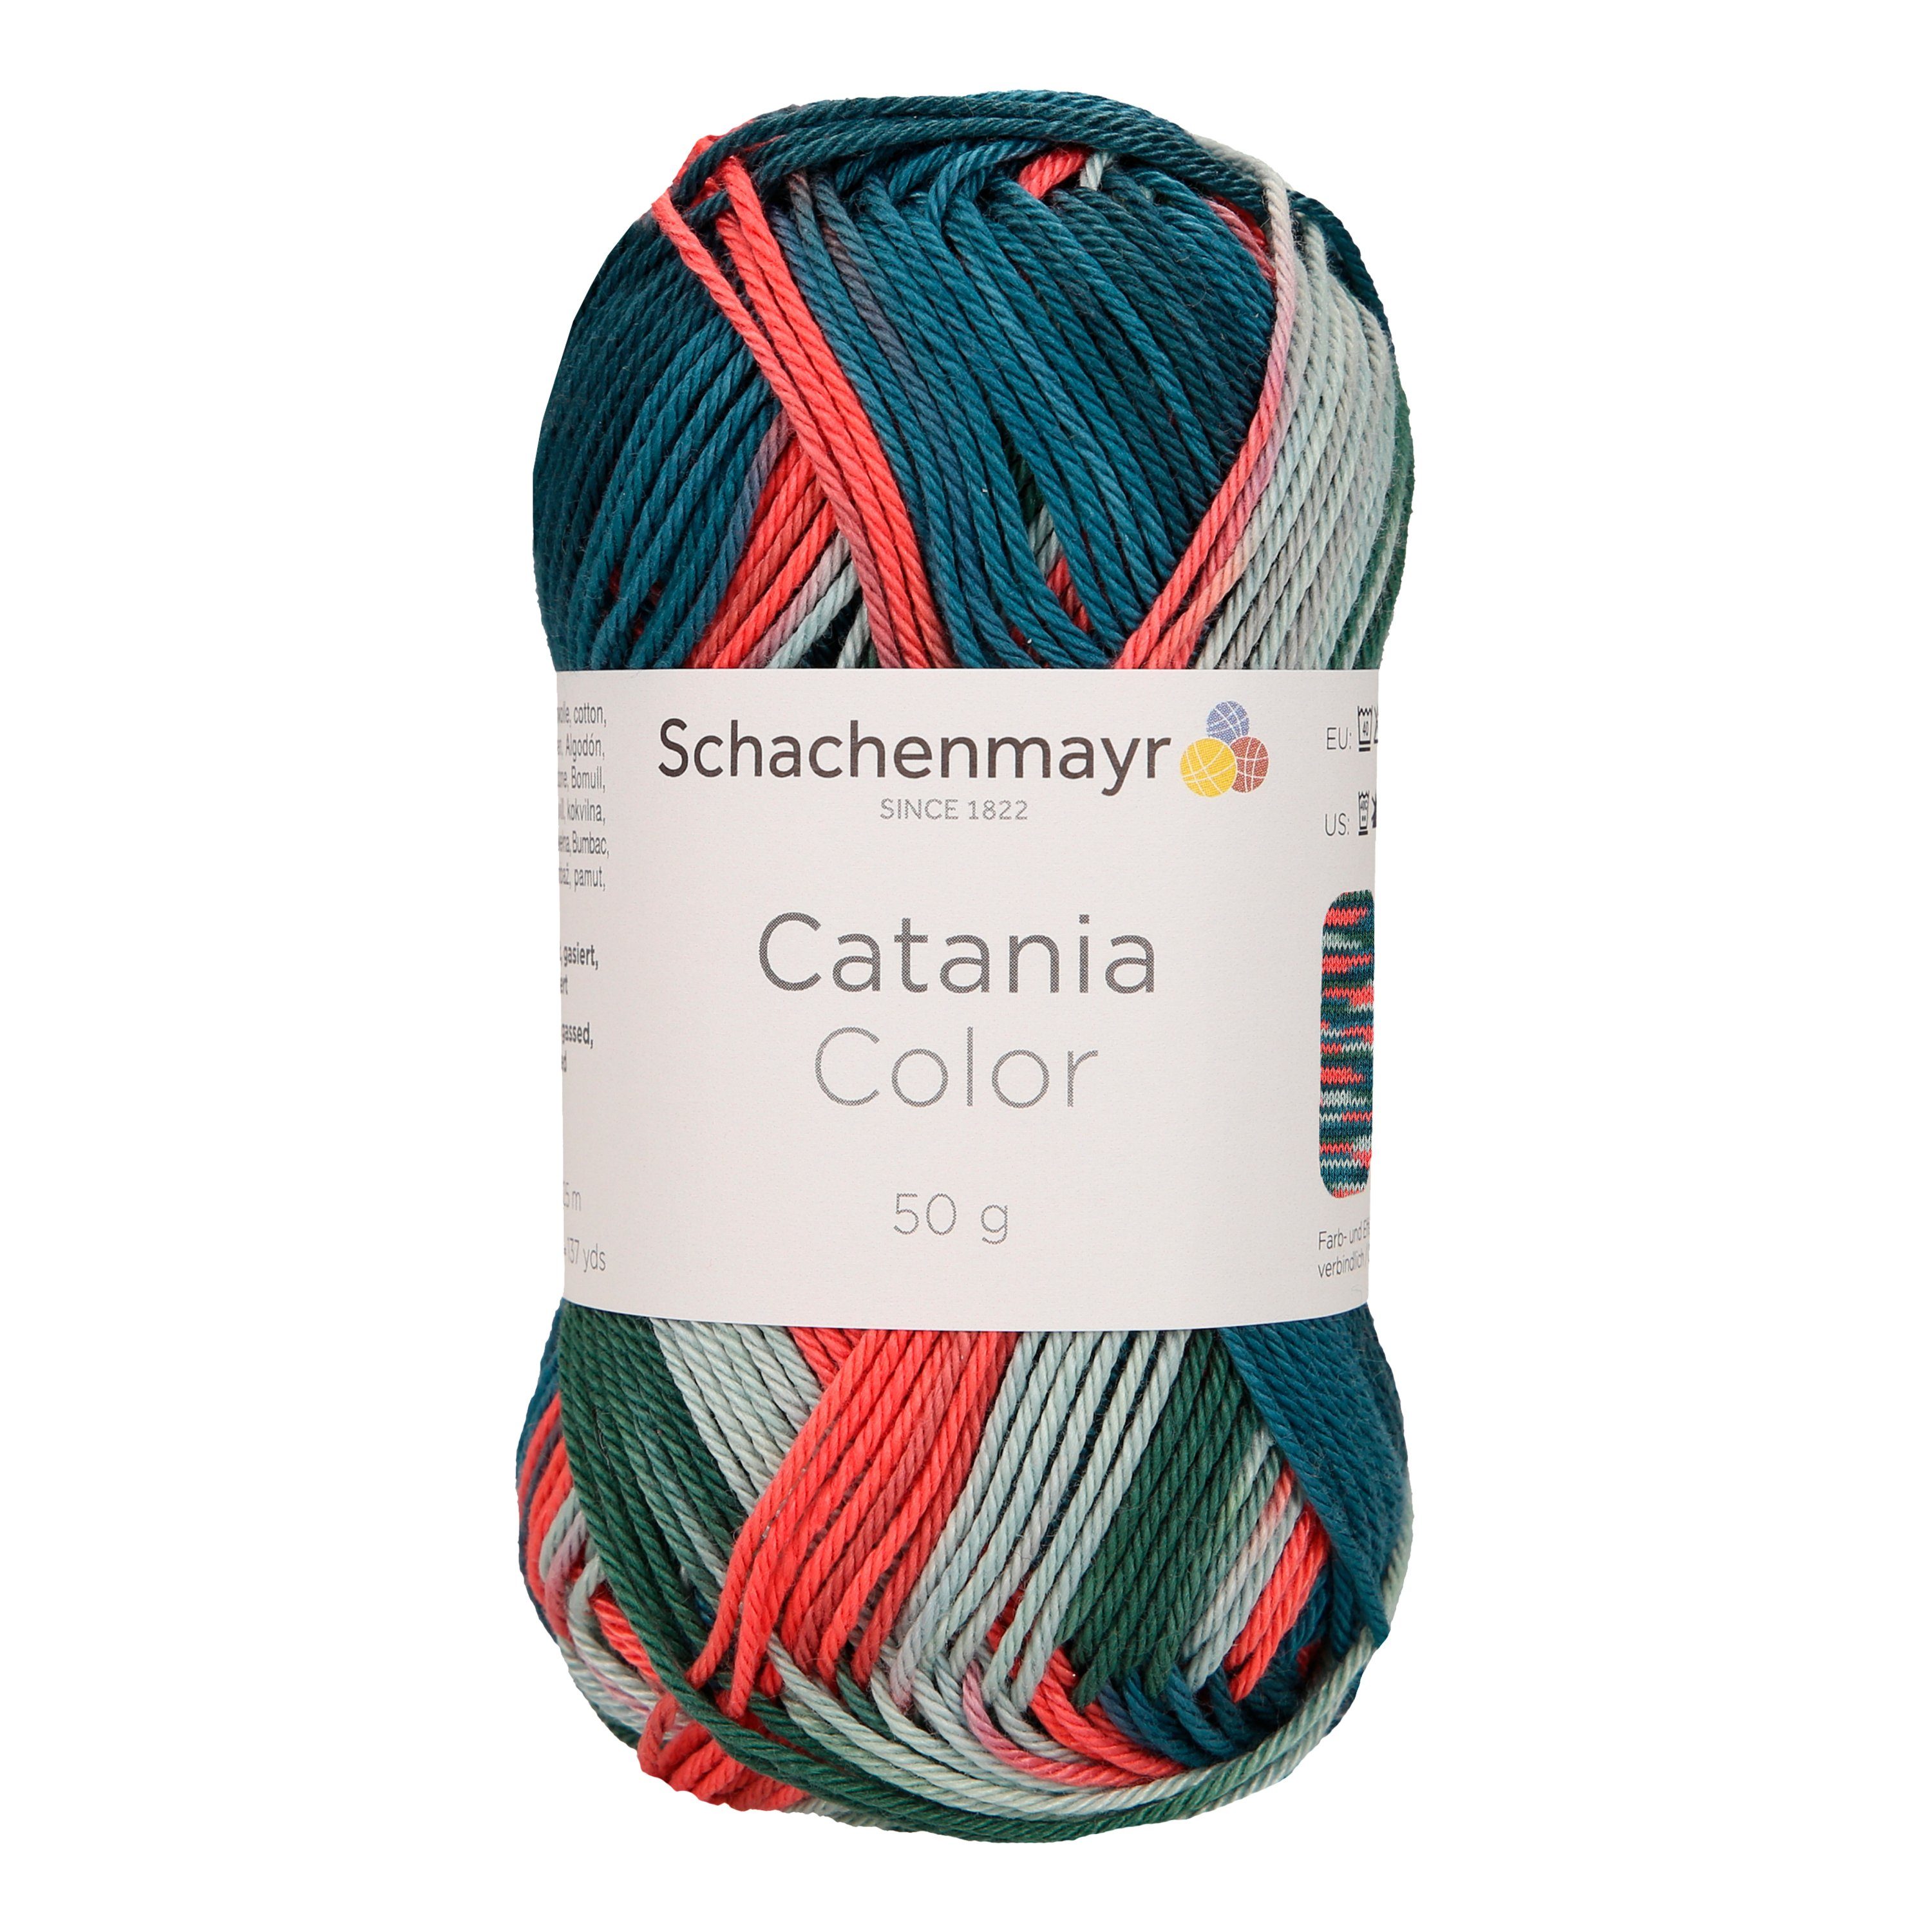 Schachenmayr Catania Color Häkelwolle, 50 g